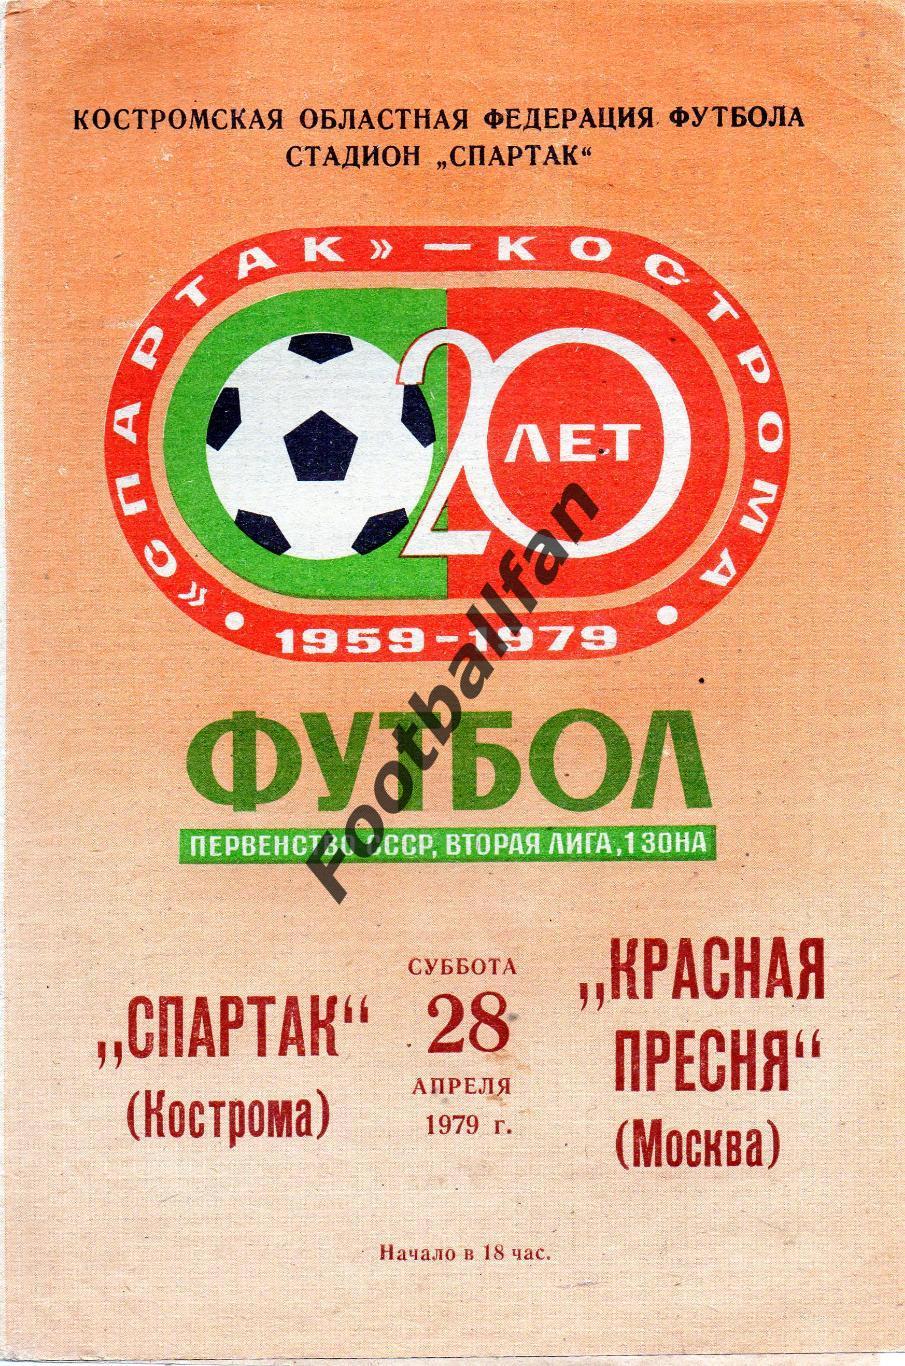 Спартак Кострома - Красная Пресня Москва 28.04.1979